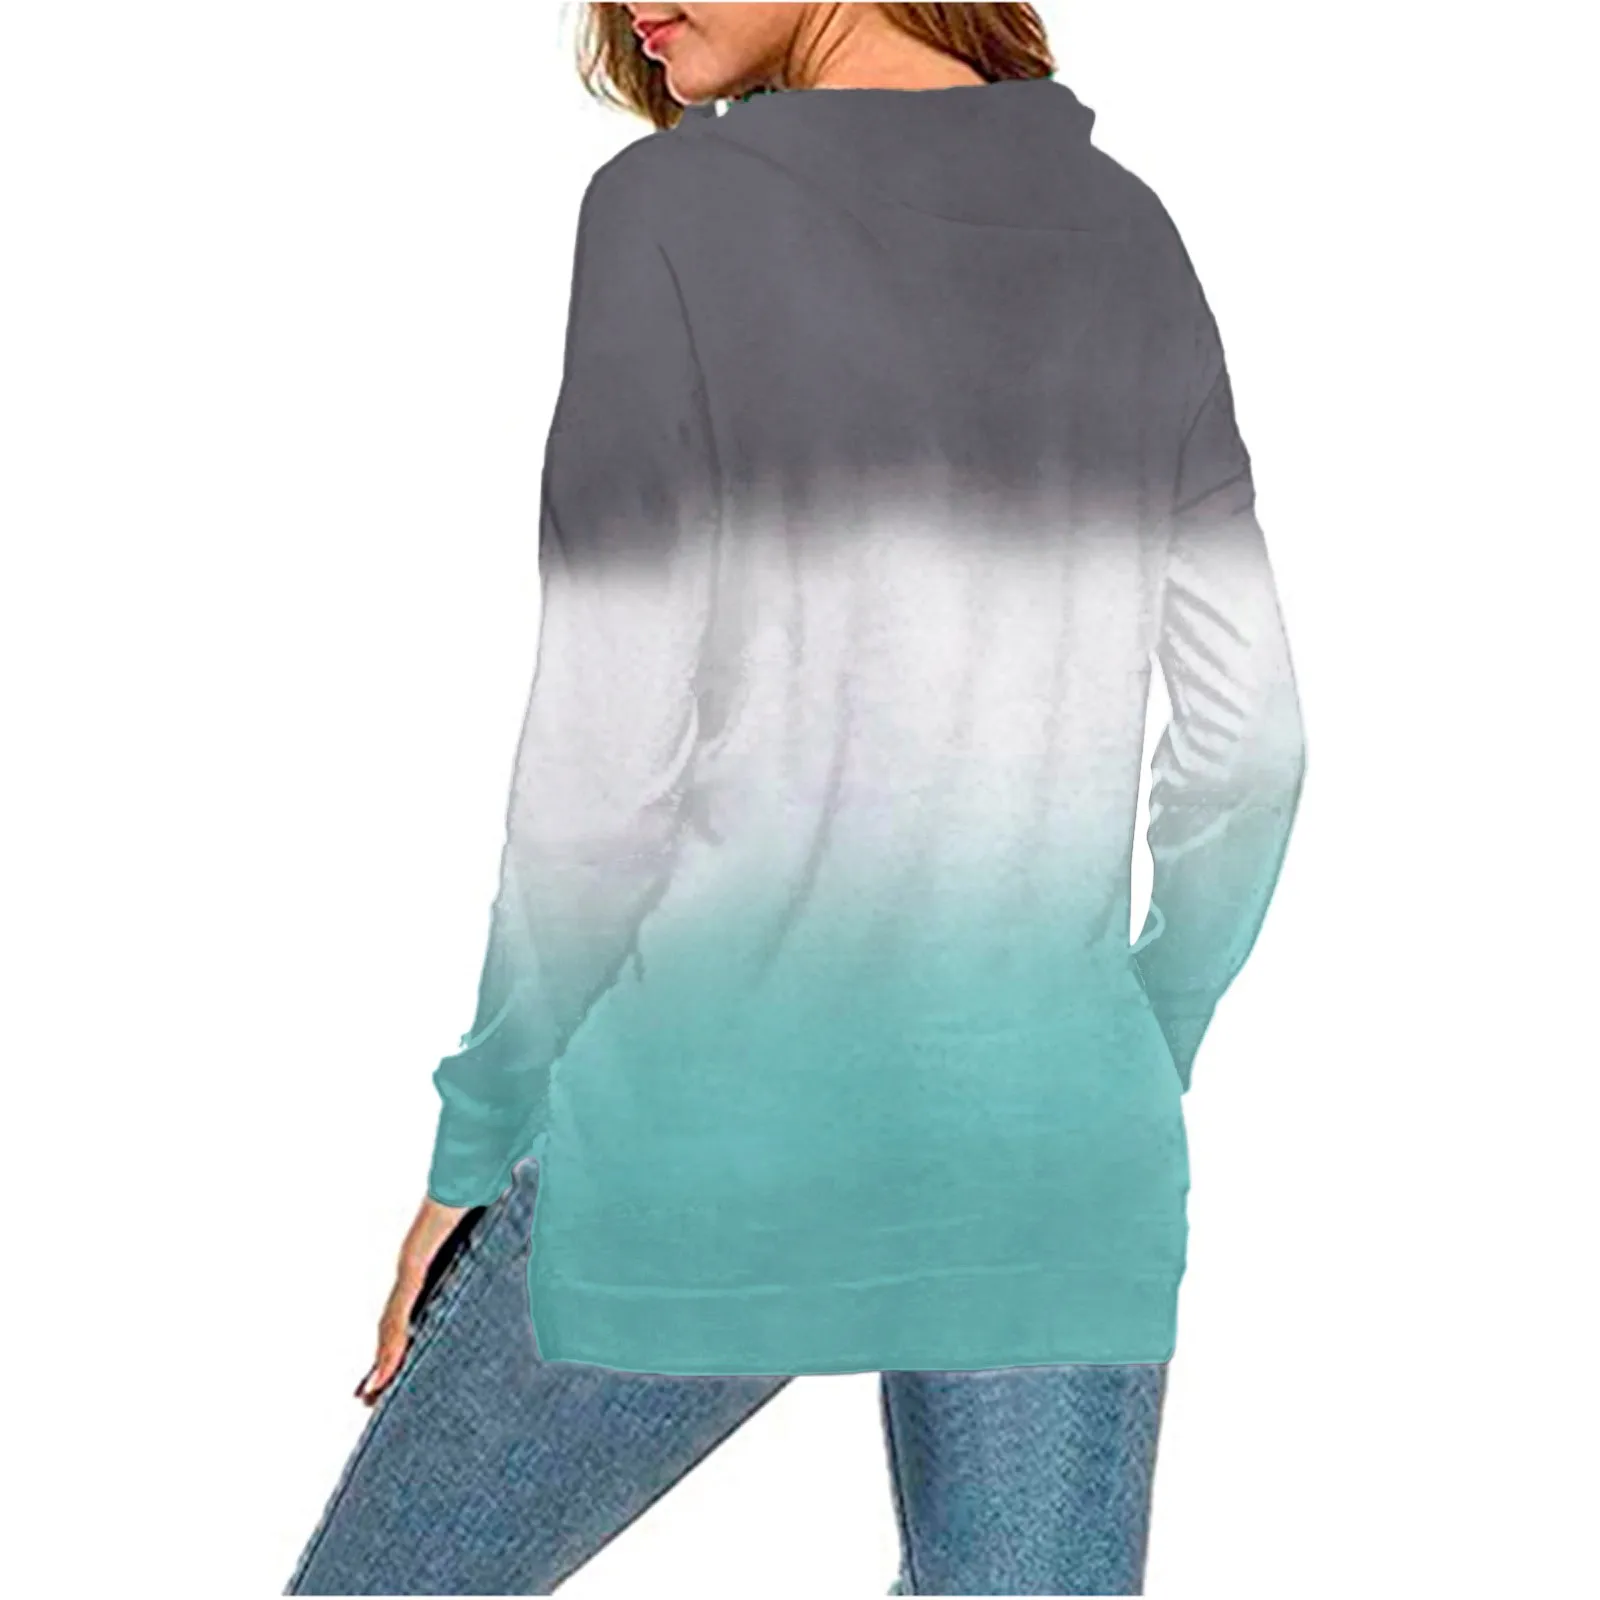 

TELOTUNY Women Jacket Long Sleeve Zip-Up Hooded Blouse Casual Thin Coat Printed Stitching Color Sweatshirt Coat